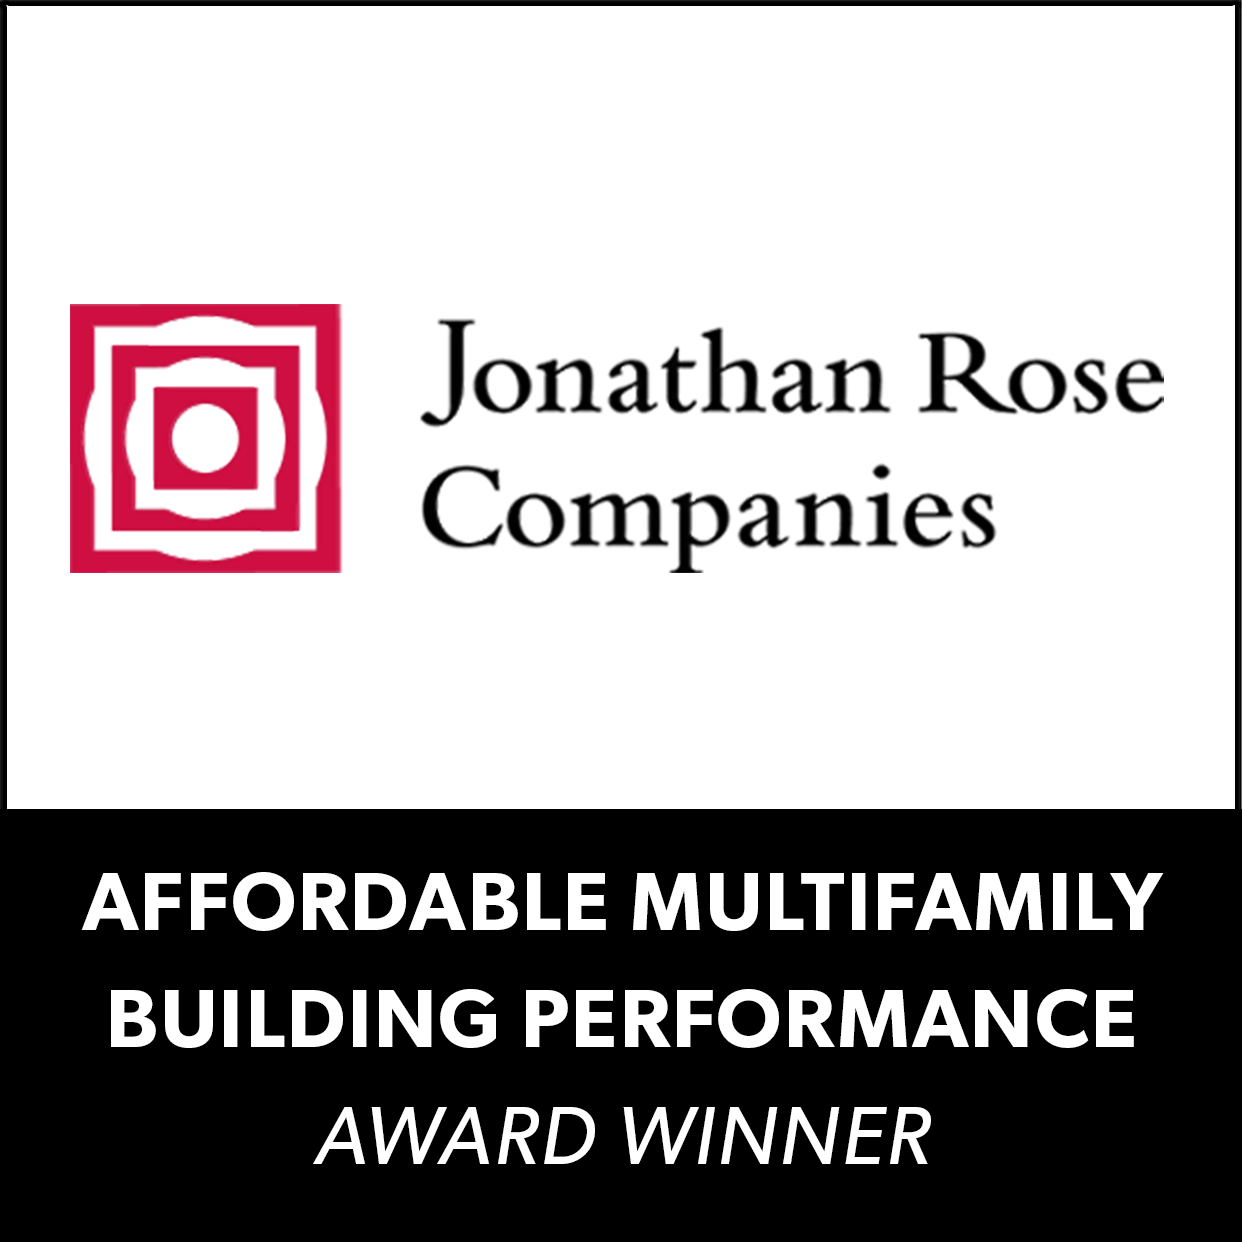 AMF_JRC_logo_award-winner.png